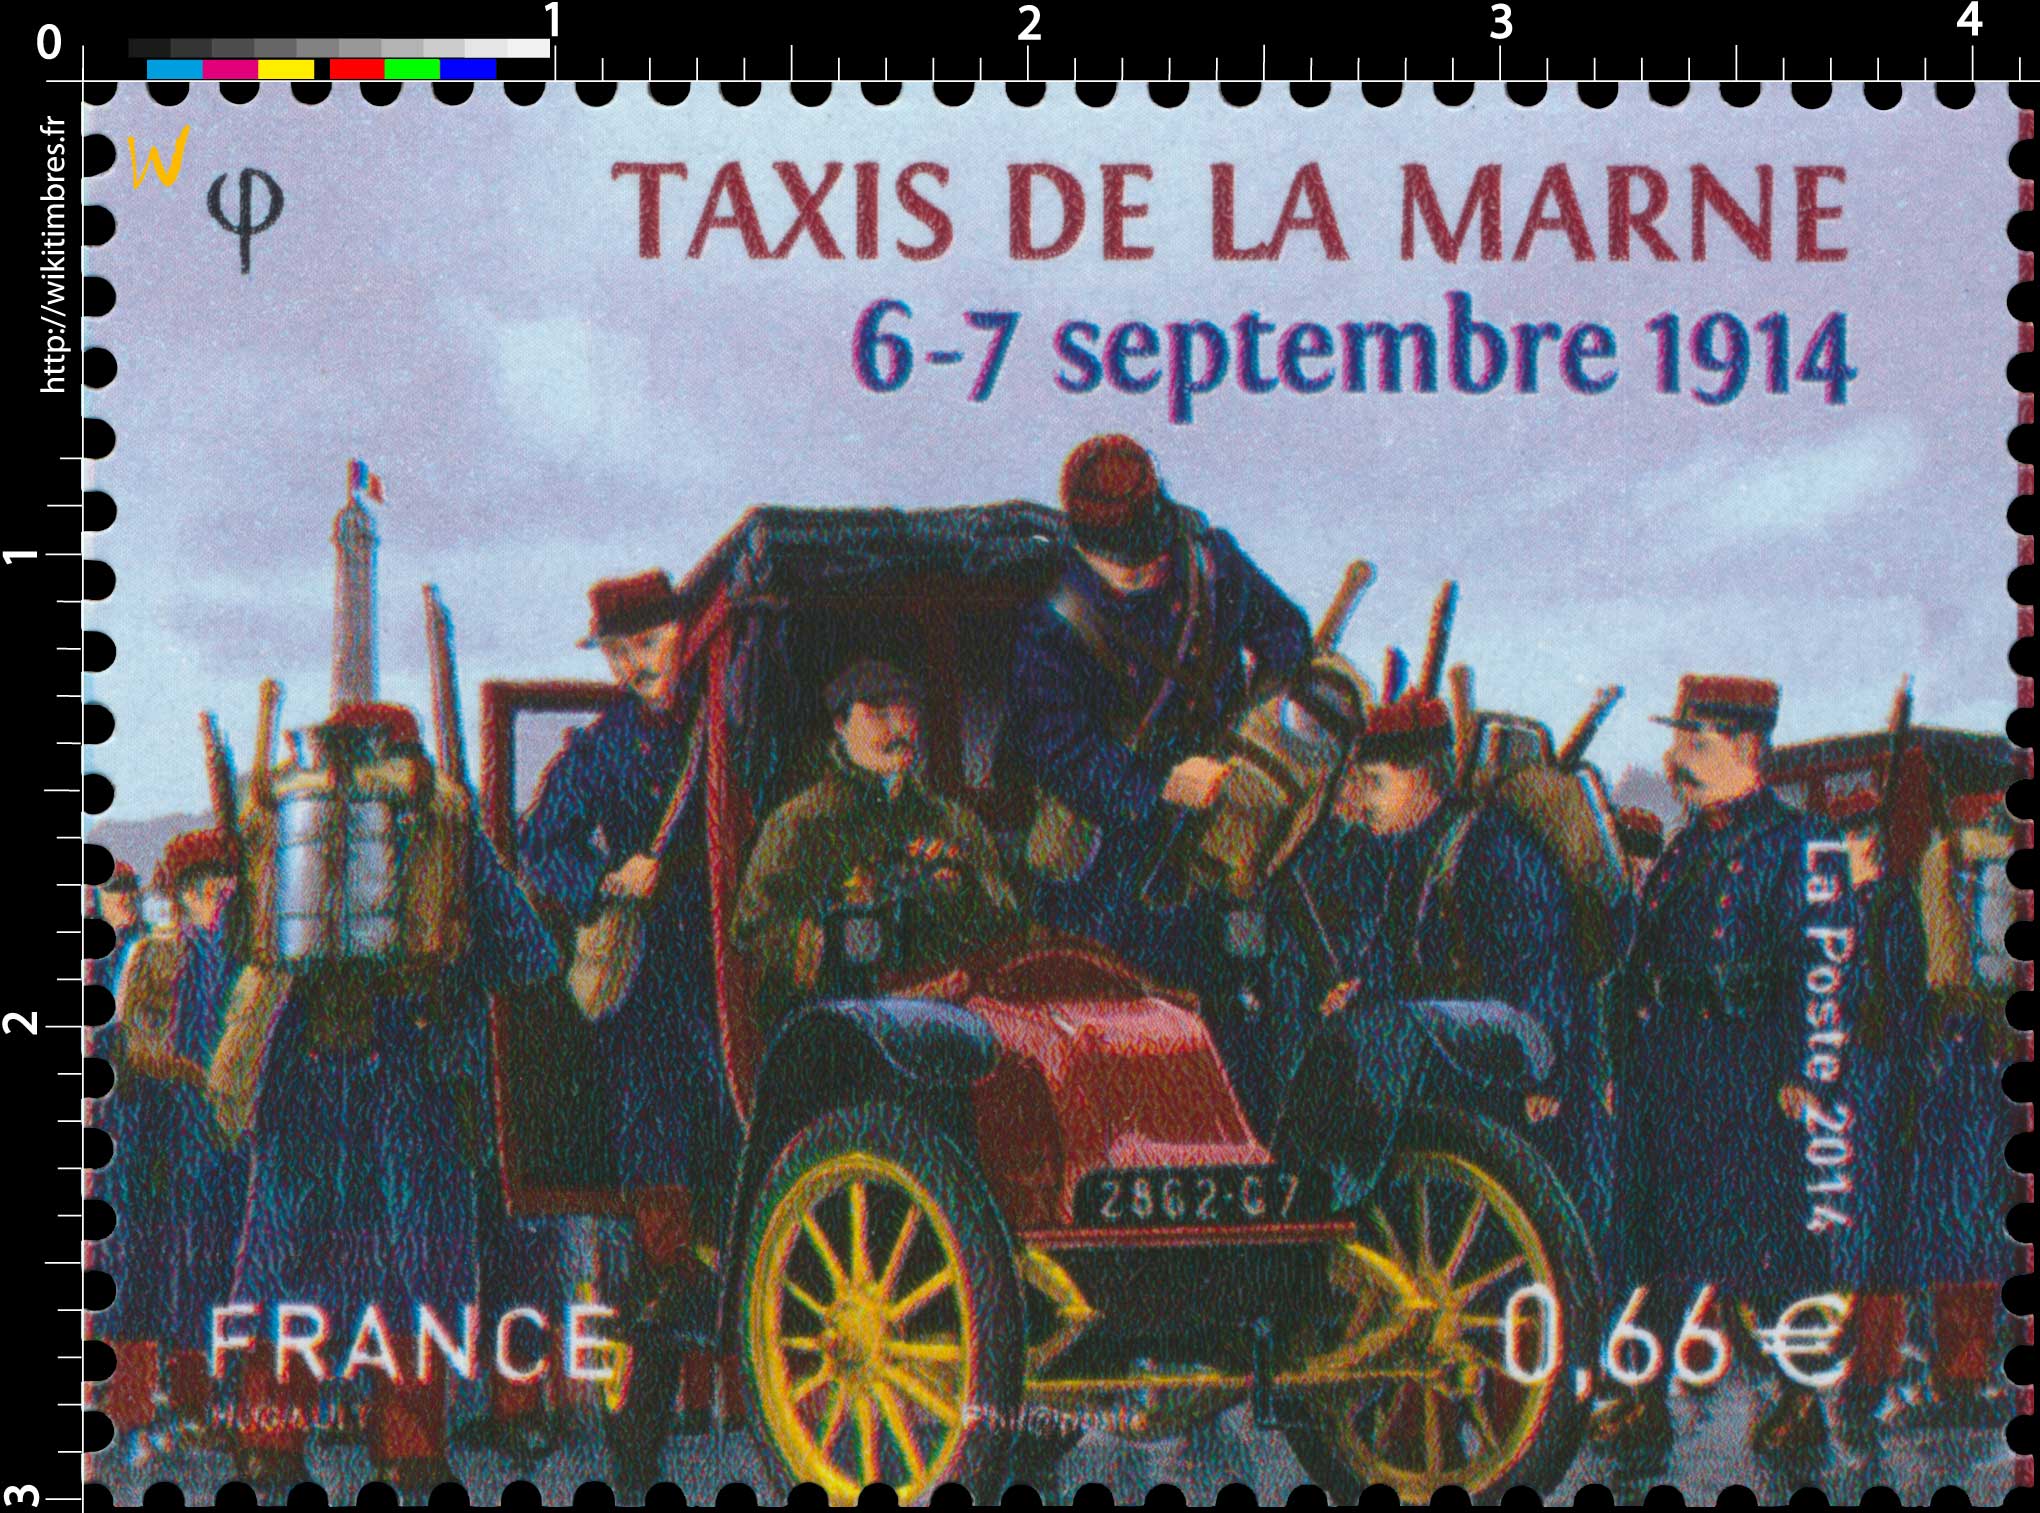 2014 TAXIS DE LA MARNE 6-12 septembre 1914